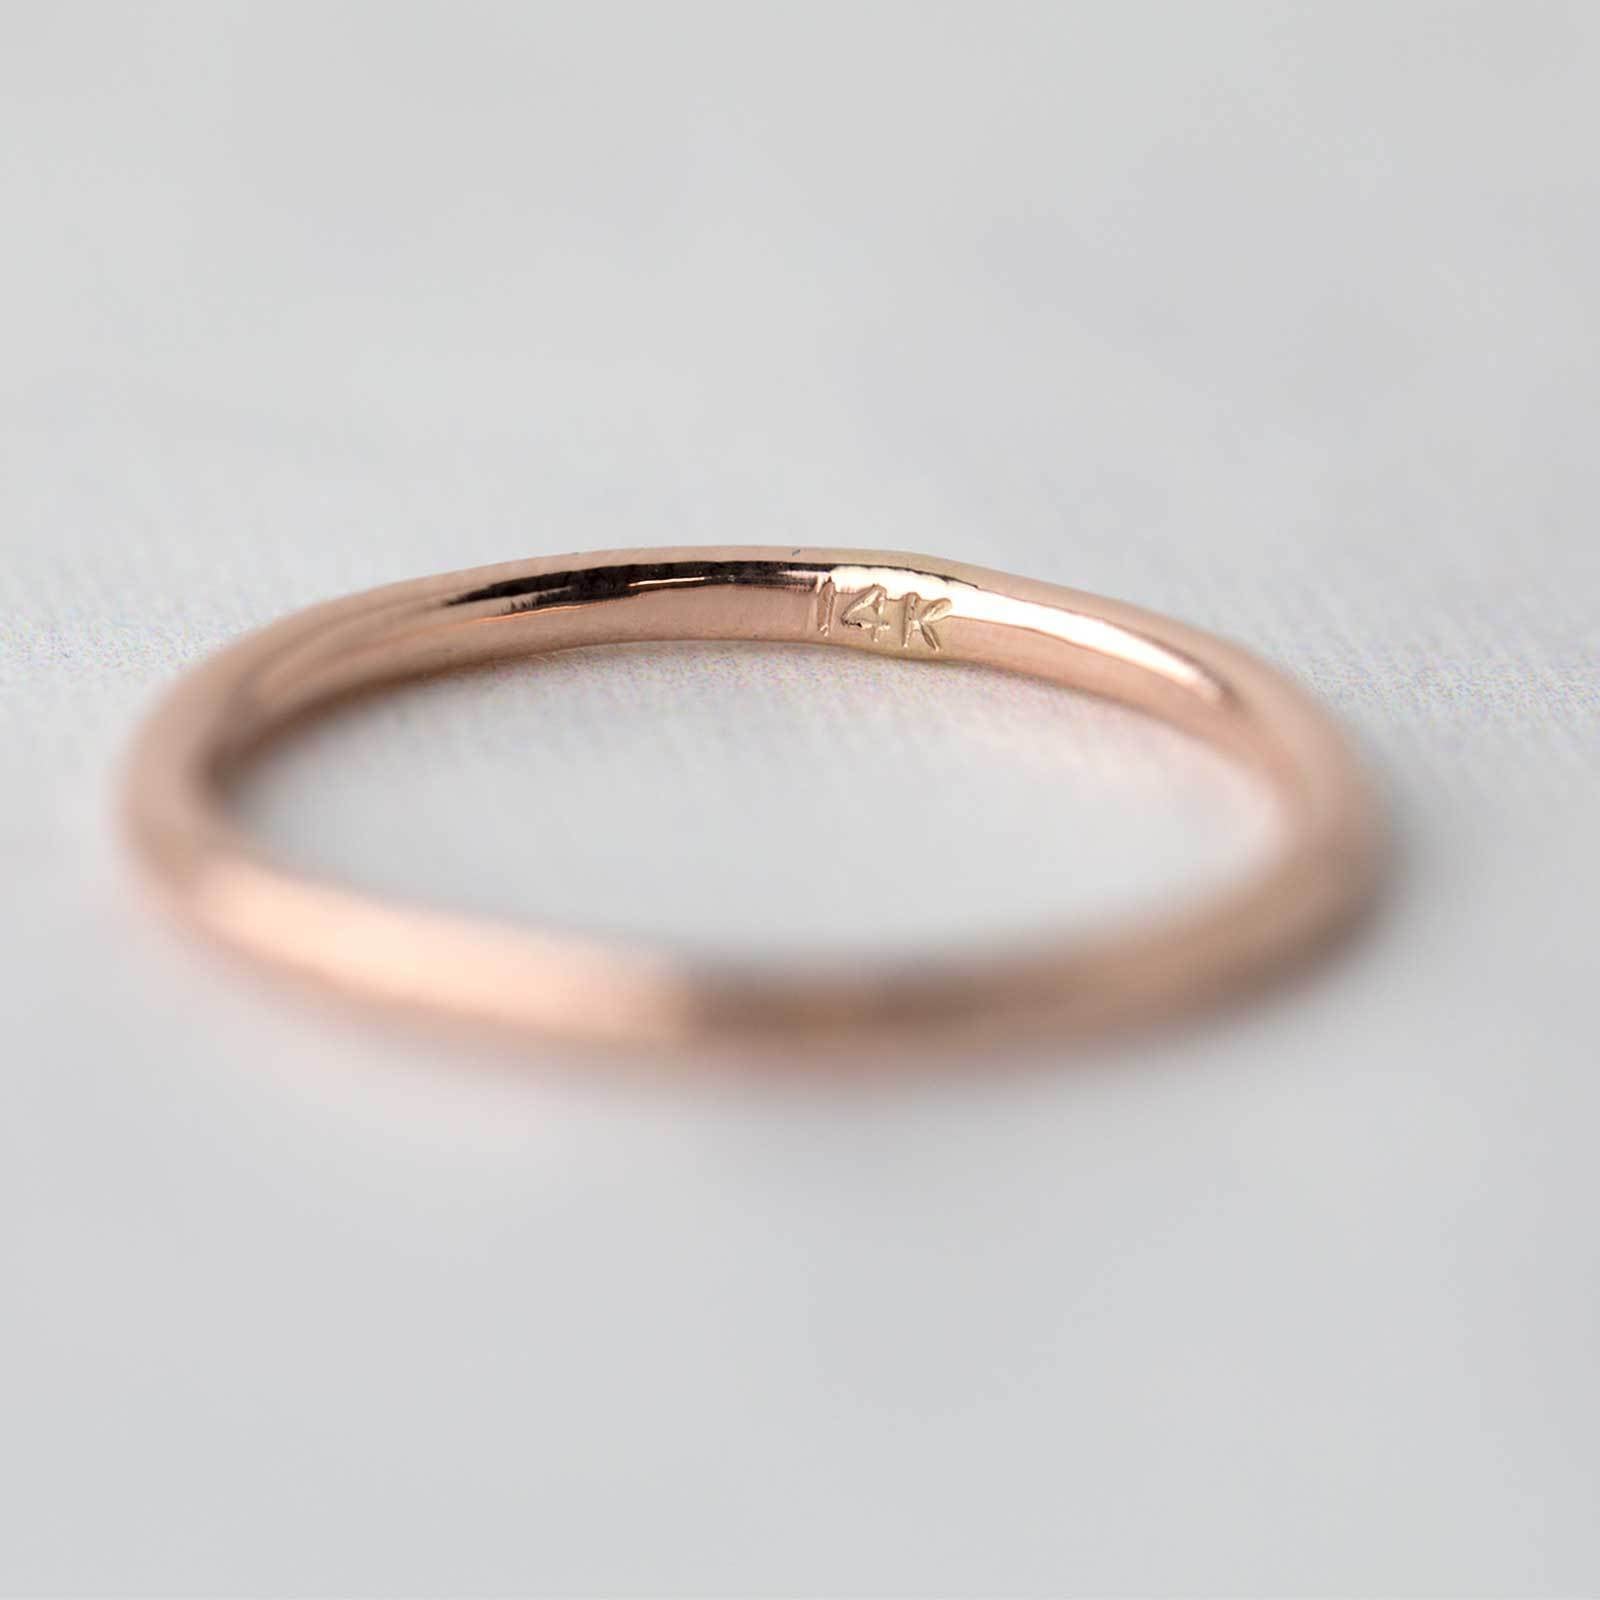 Medium Bark Ring - 14K Rose Gold - Handmade Jewelry by Burnish